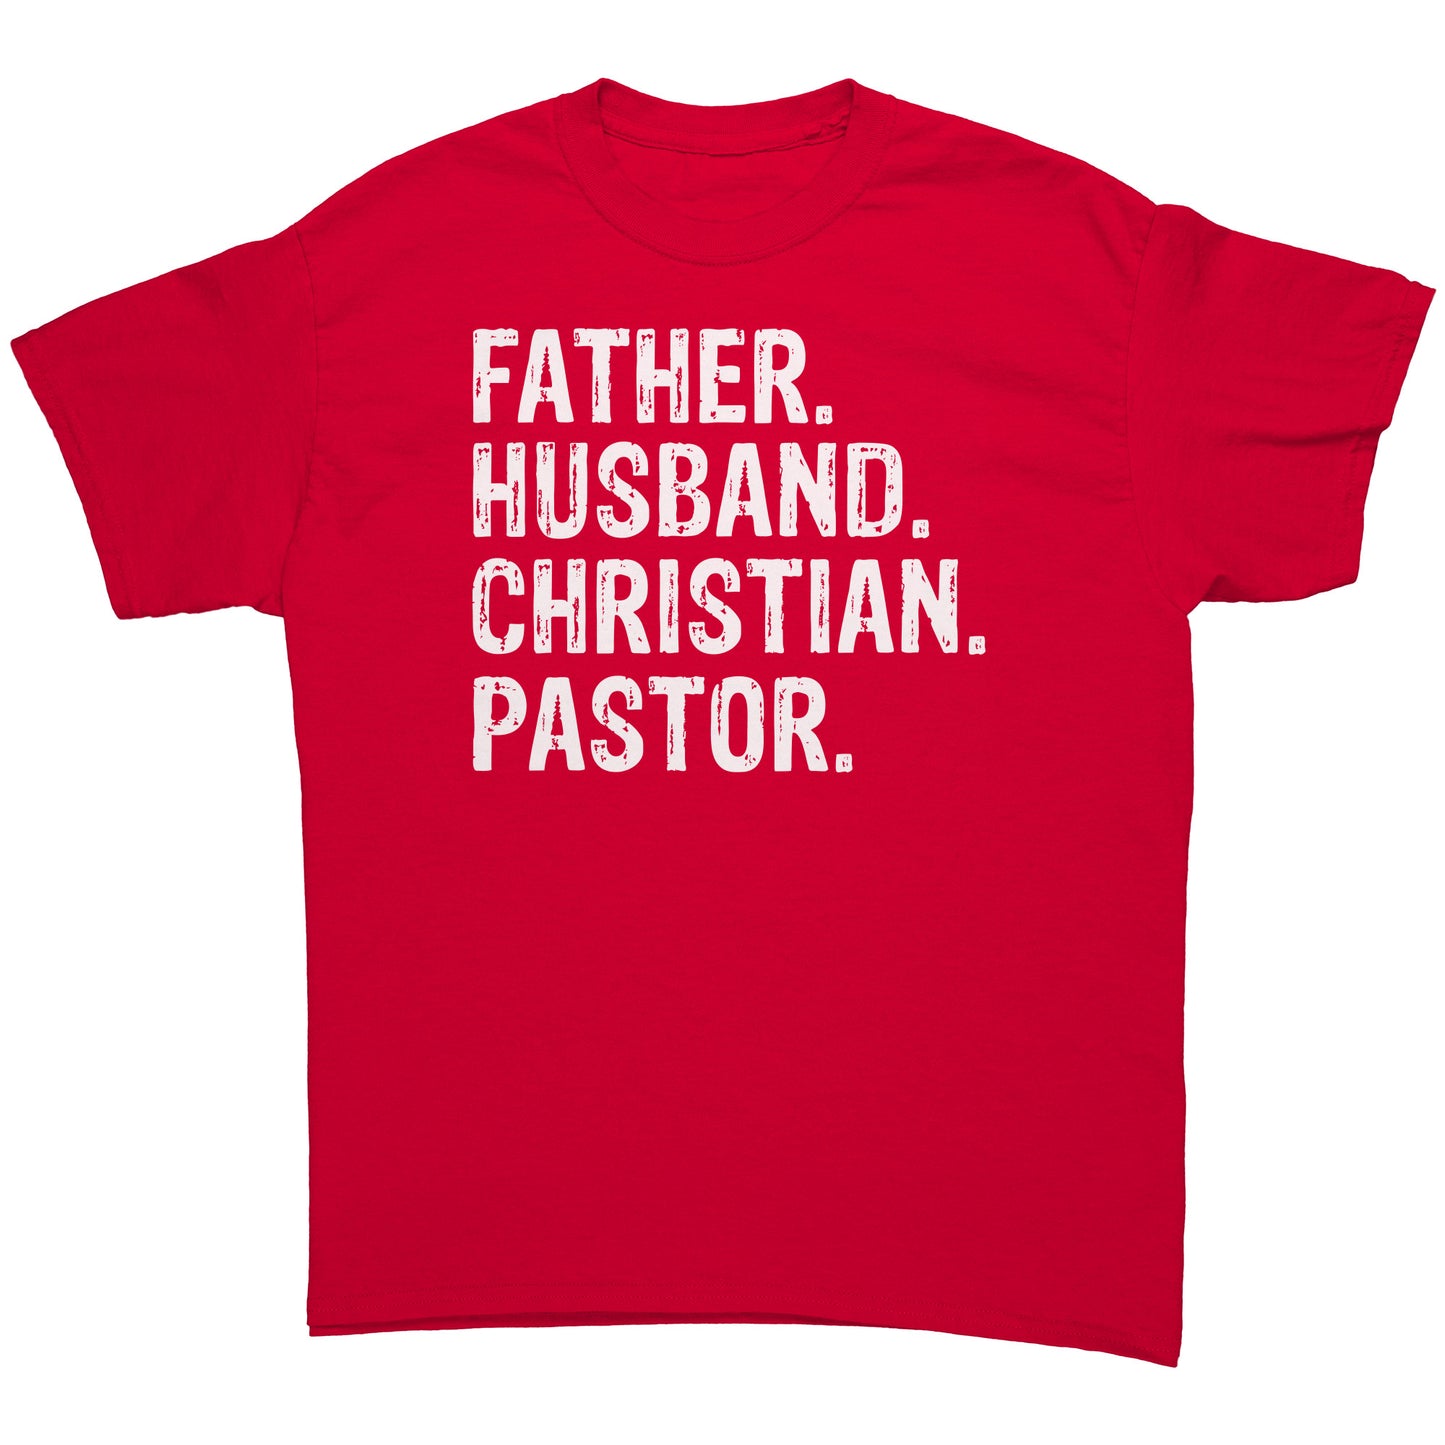 Father. Husband. Christian. Pastor Men's T-Shirt Part 2